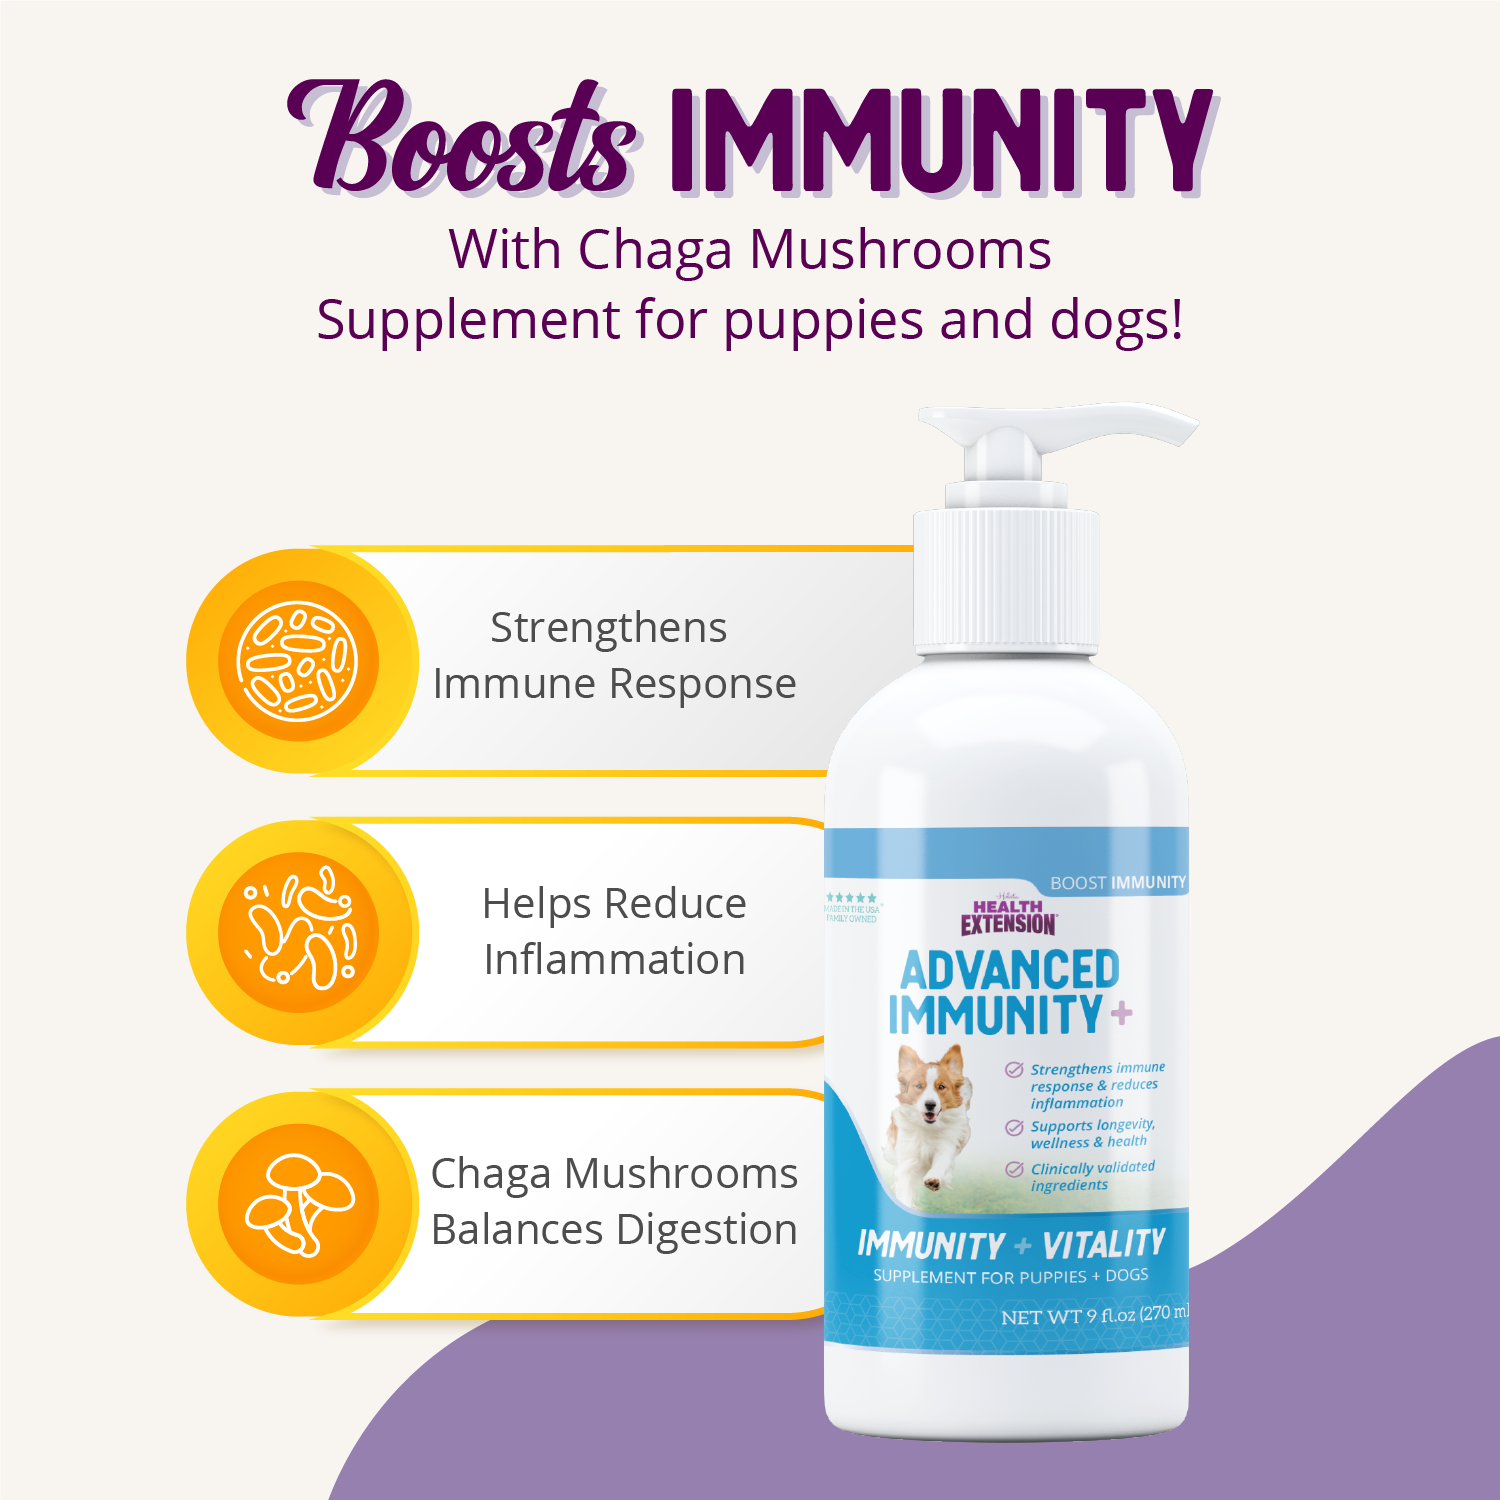 Advanced Immunity+